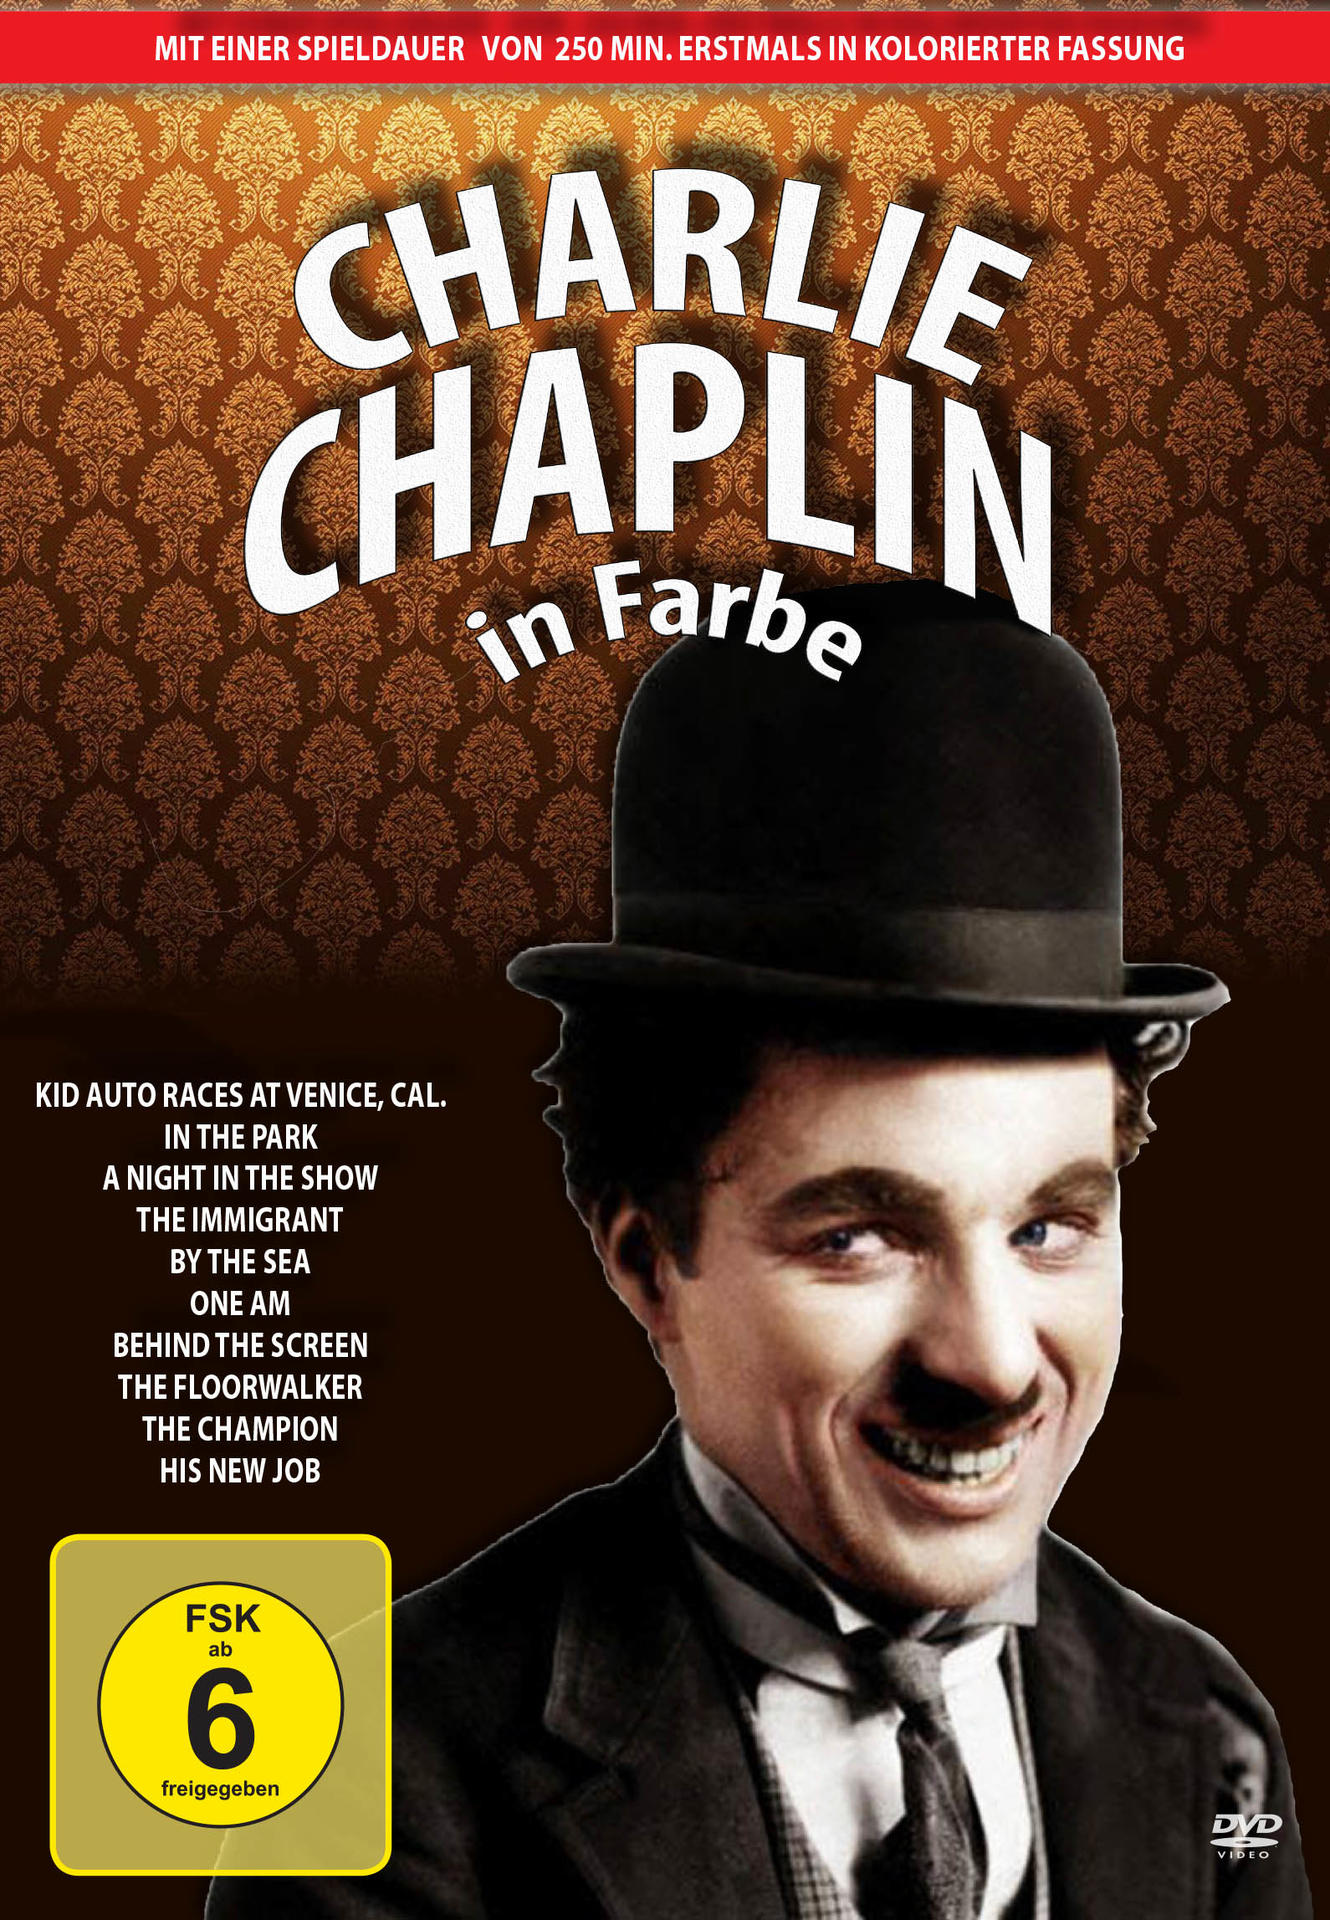 In Farbe Chaplin Charlie DVD